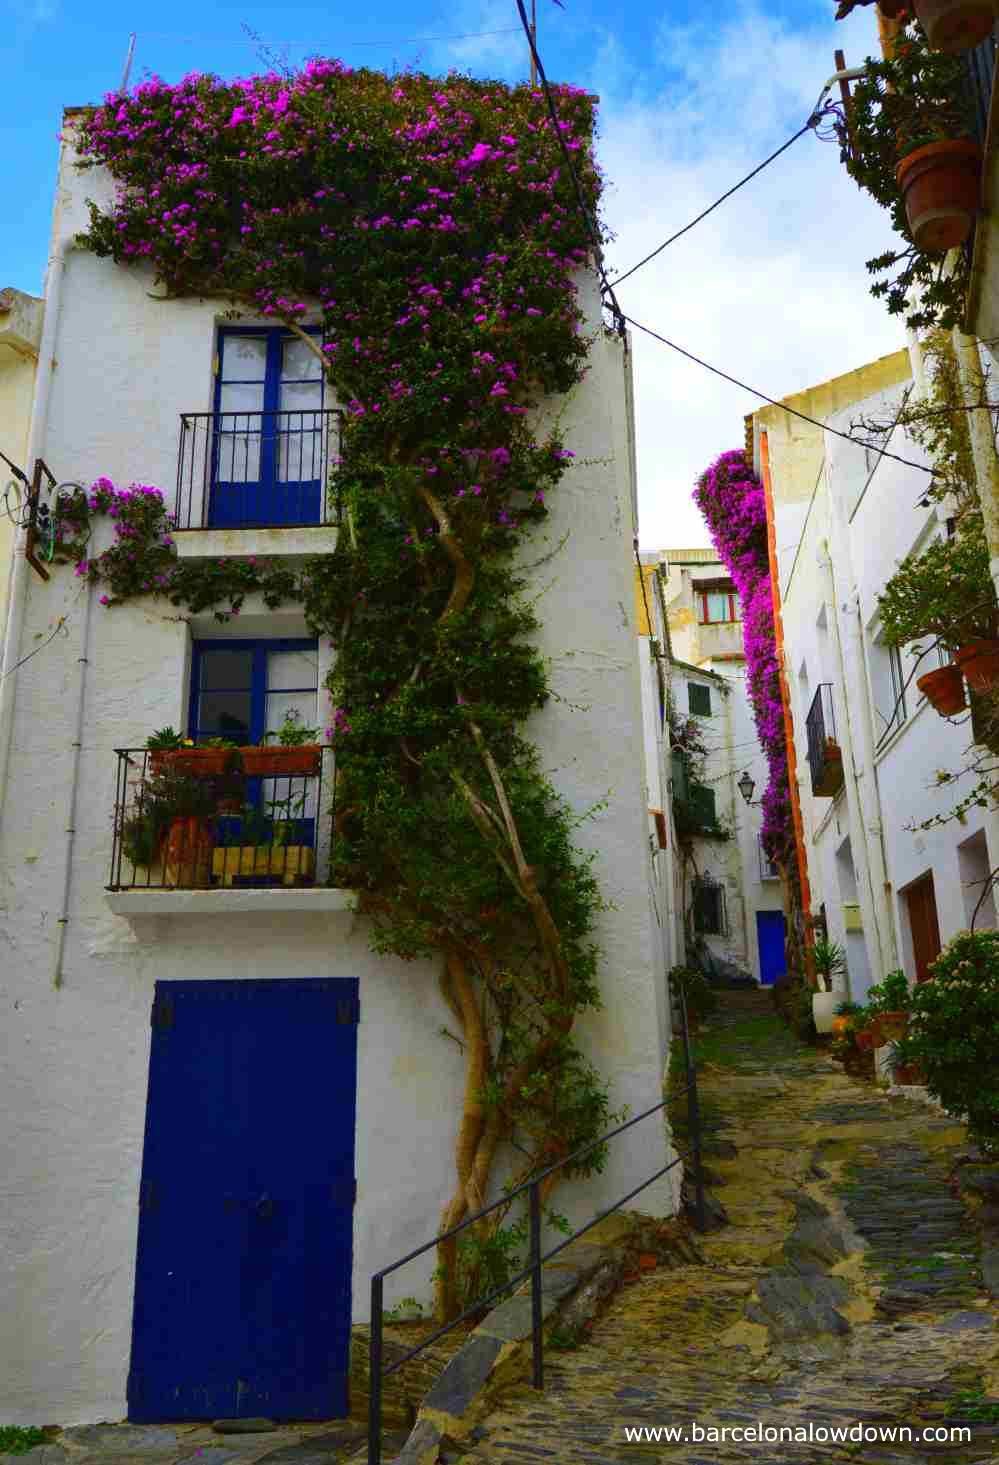 Narrow streets in Cadaqués, Spain